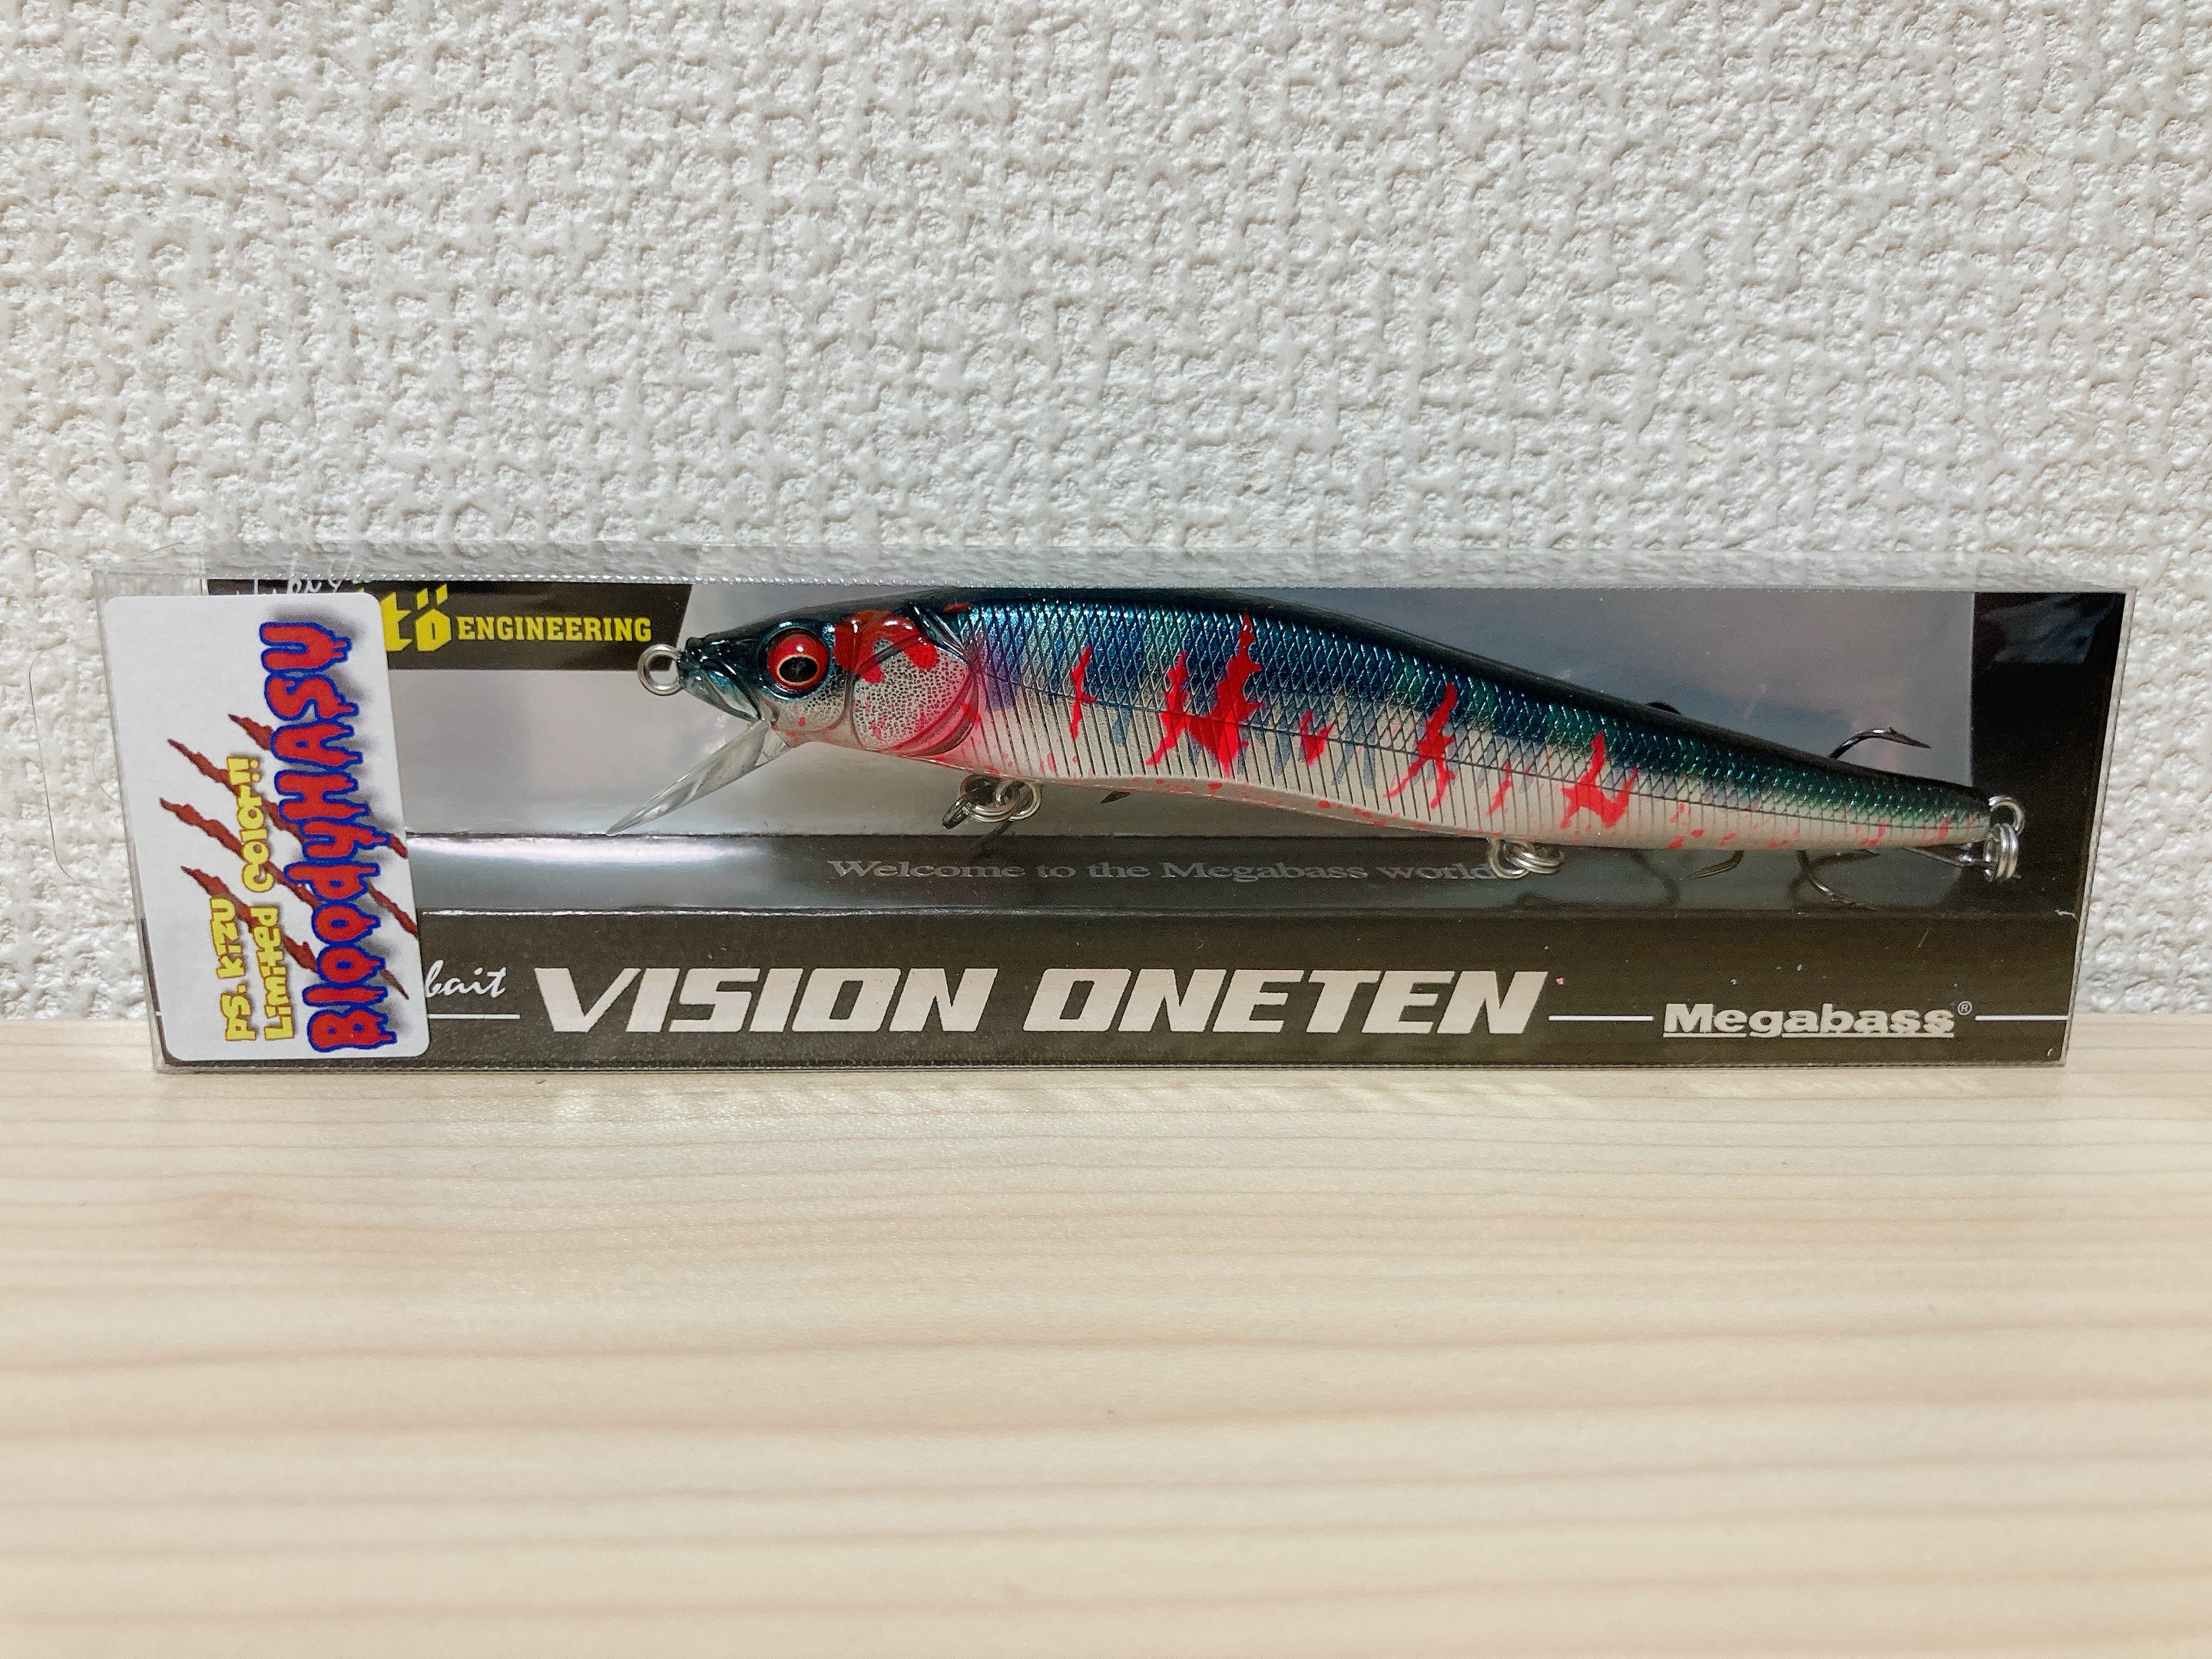 Megabass Ito Engineering Vision Oneten 110 Bloody Hasu Fishing Lure New